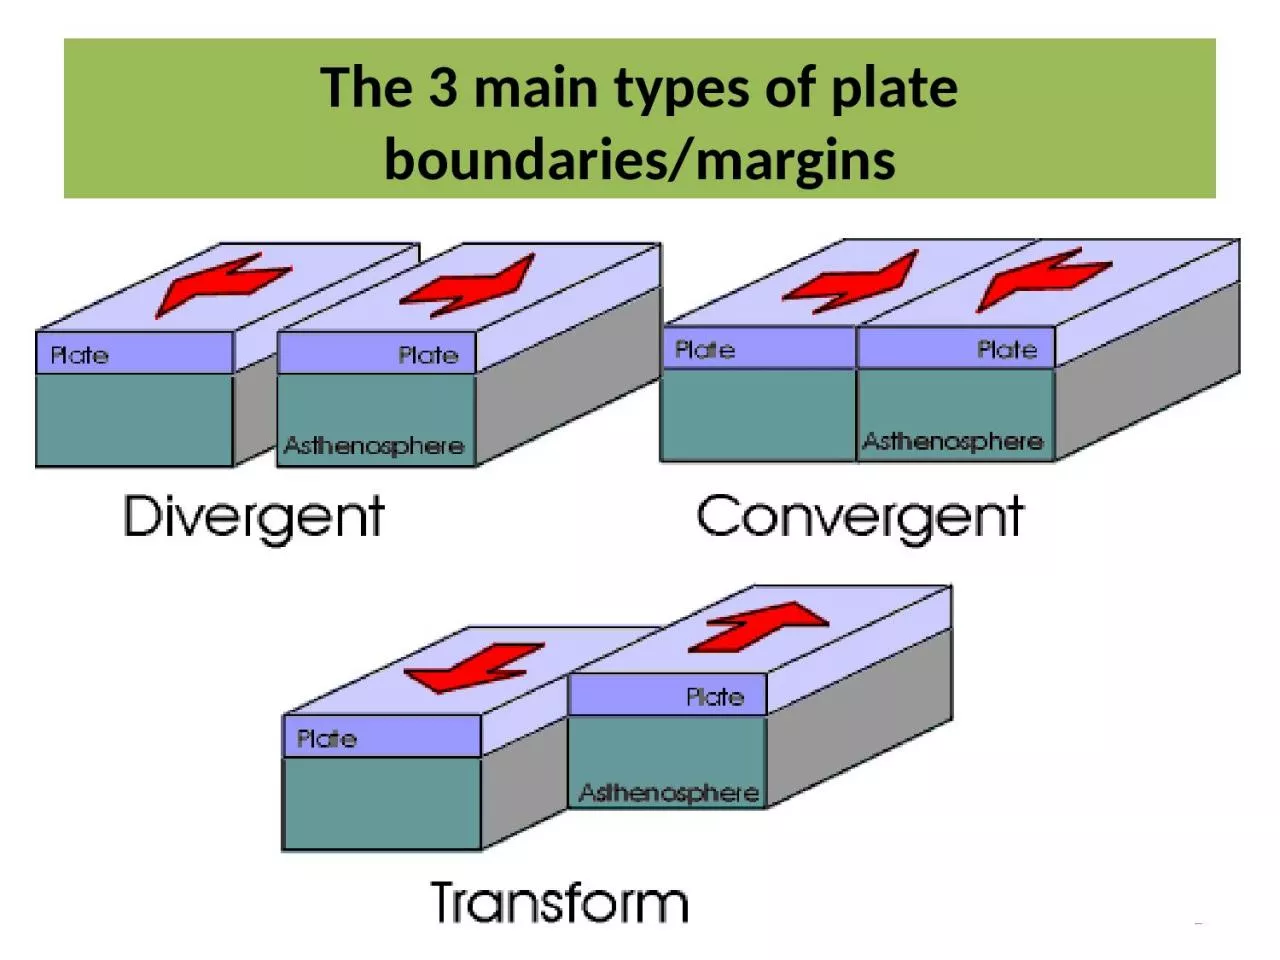 The 3 main types of plate boundaries/margins